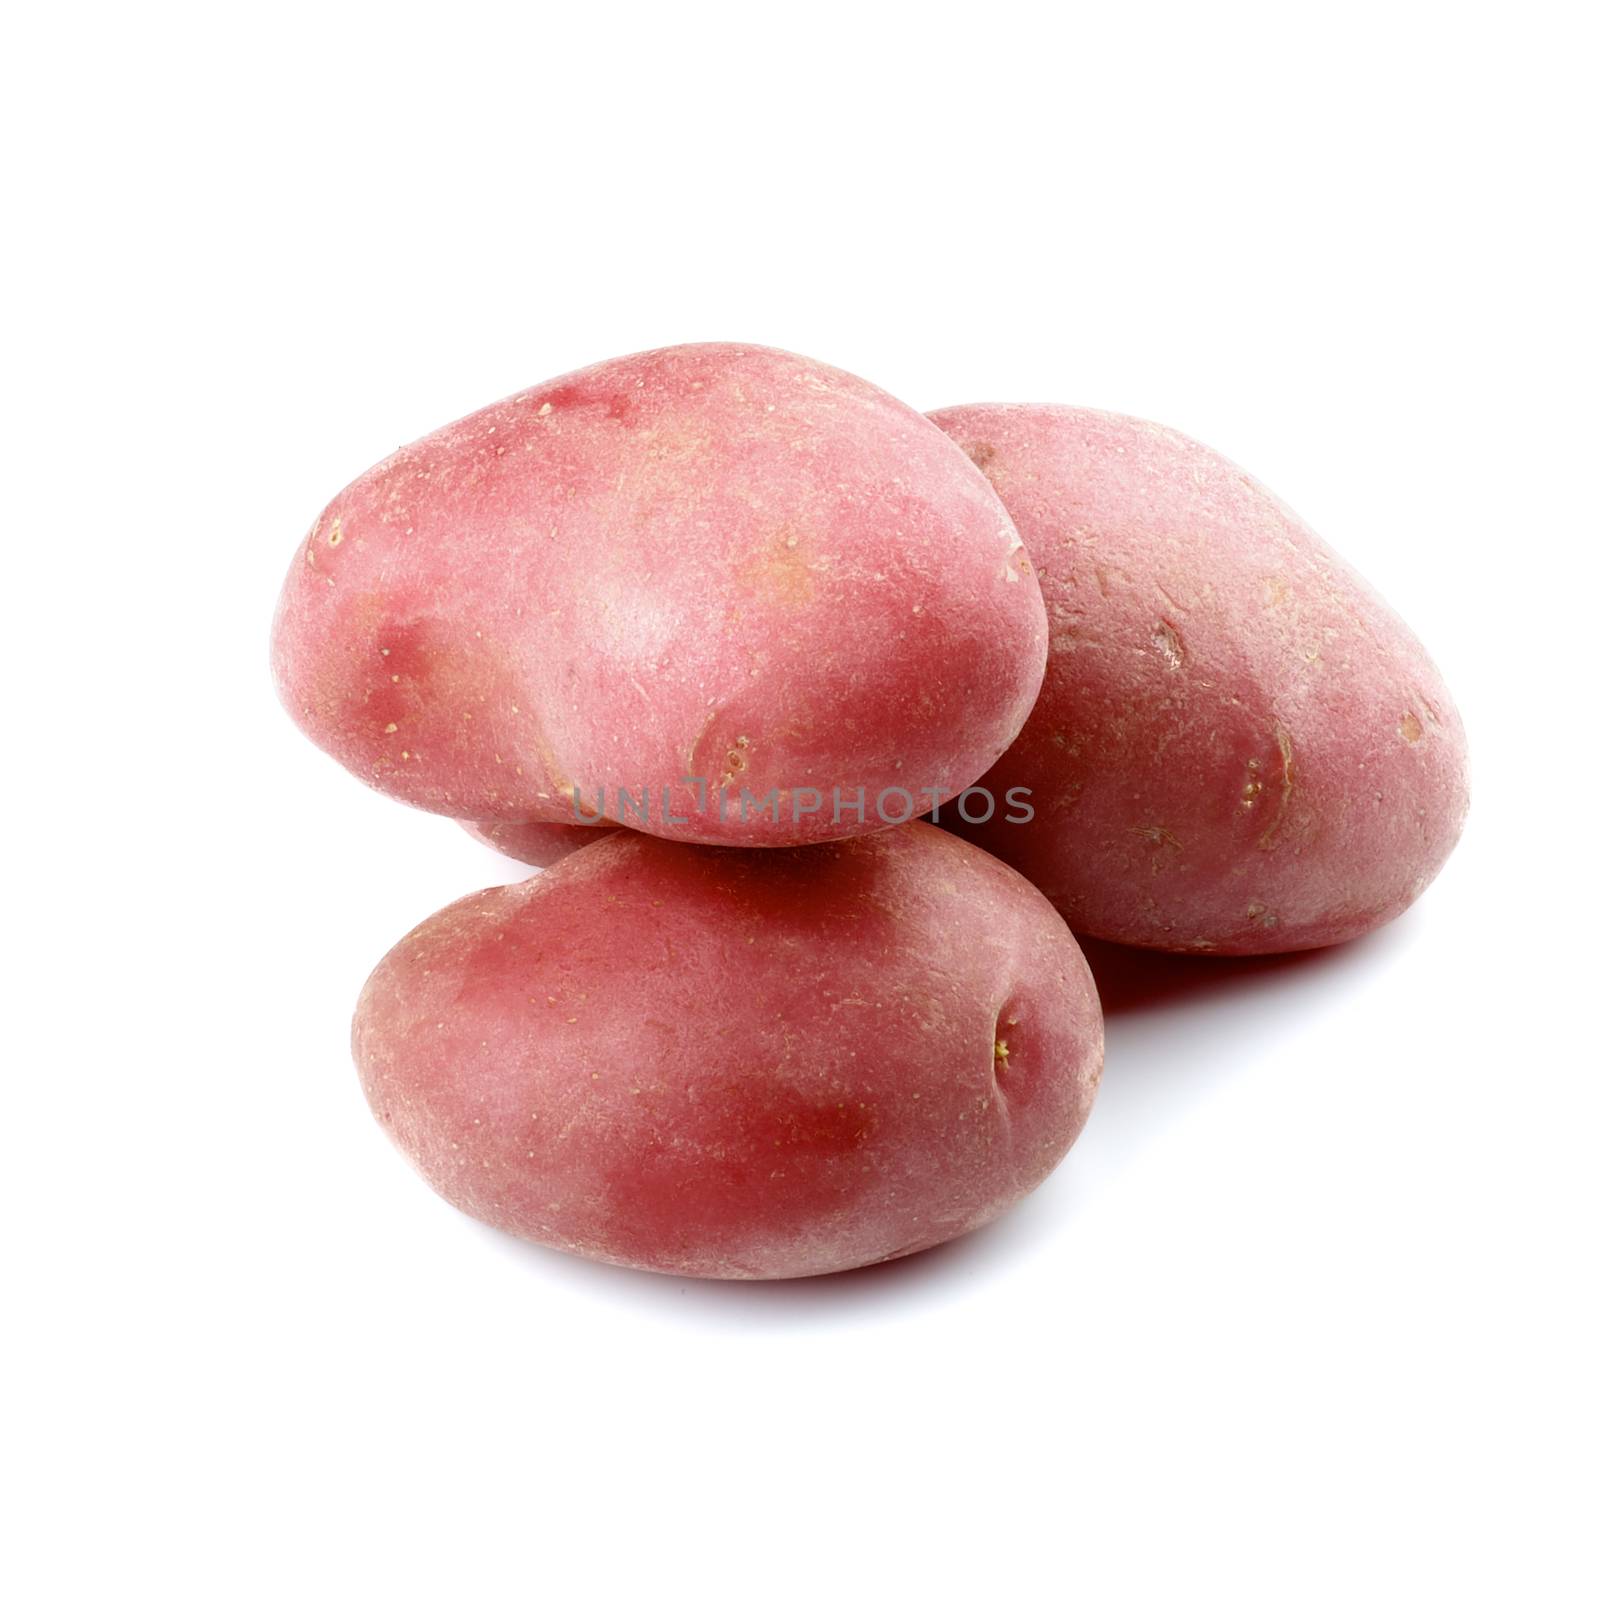 Red Potatoes by zhekos